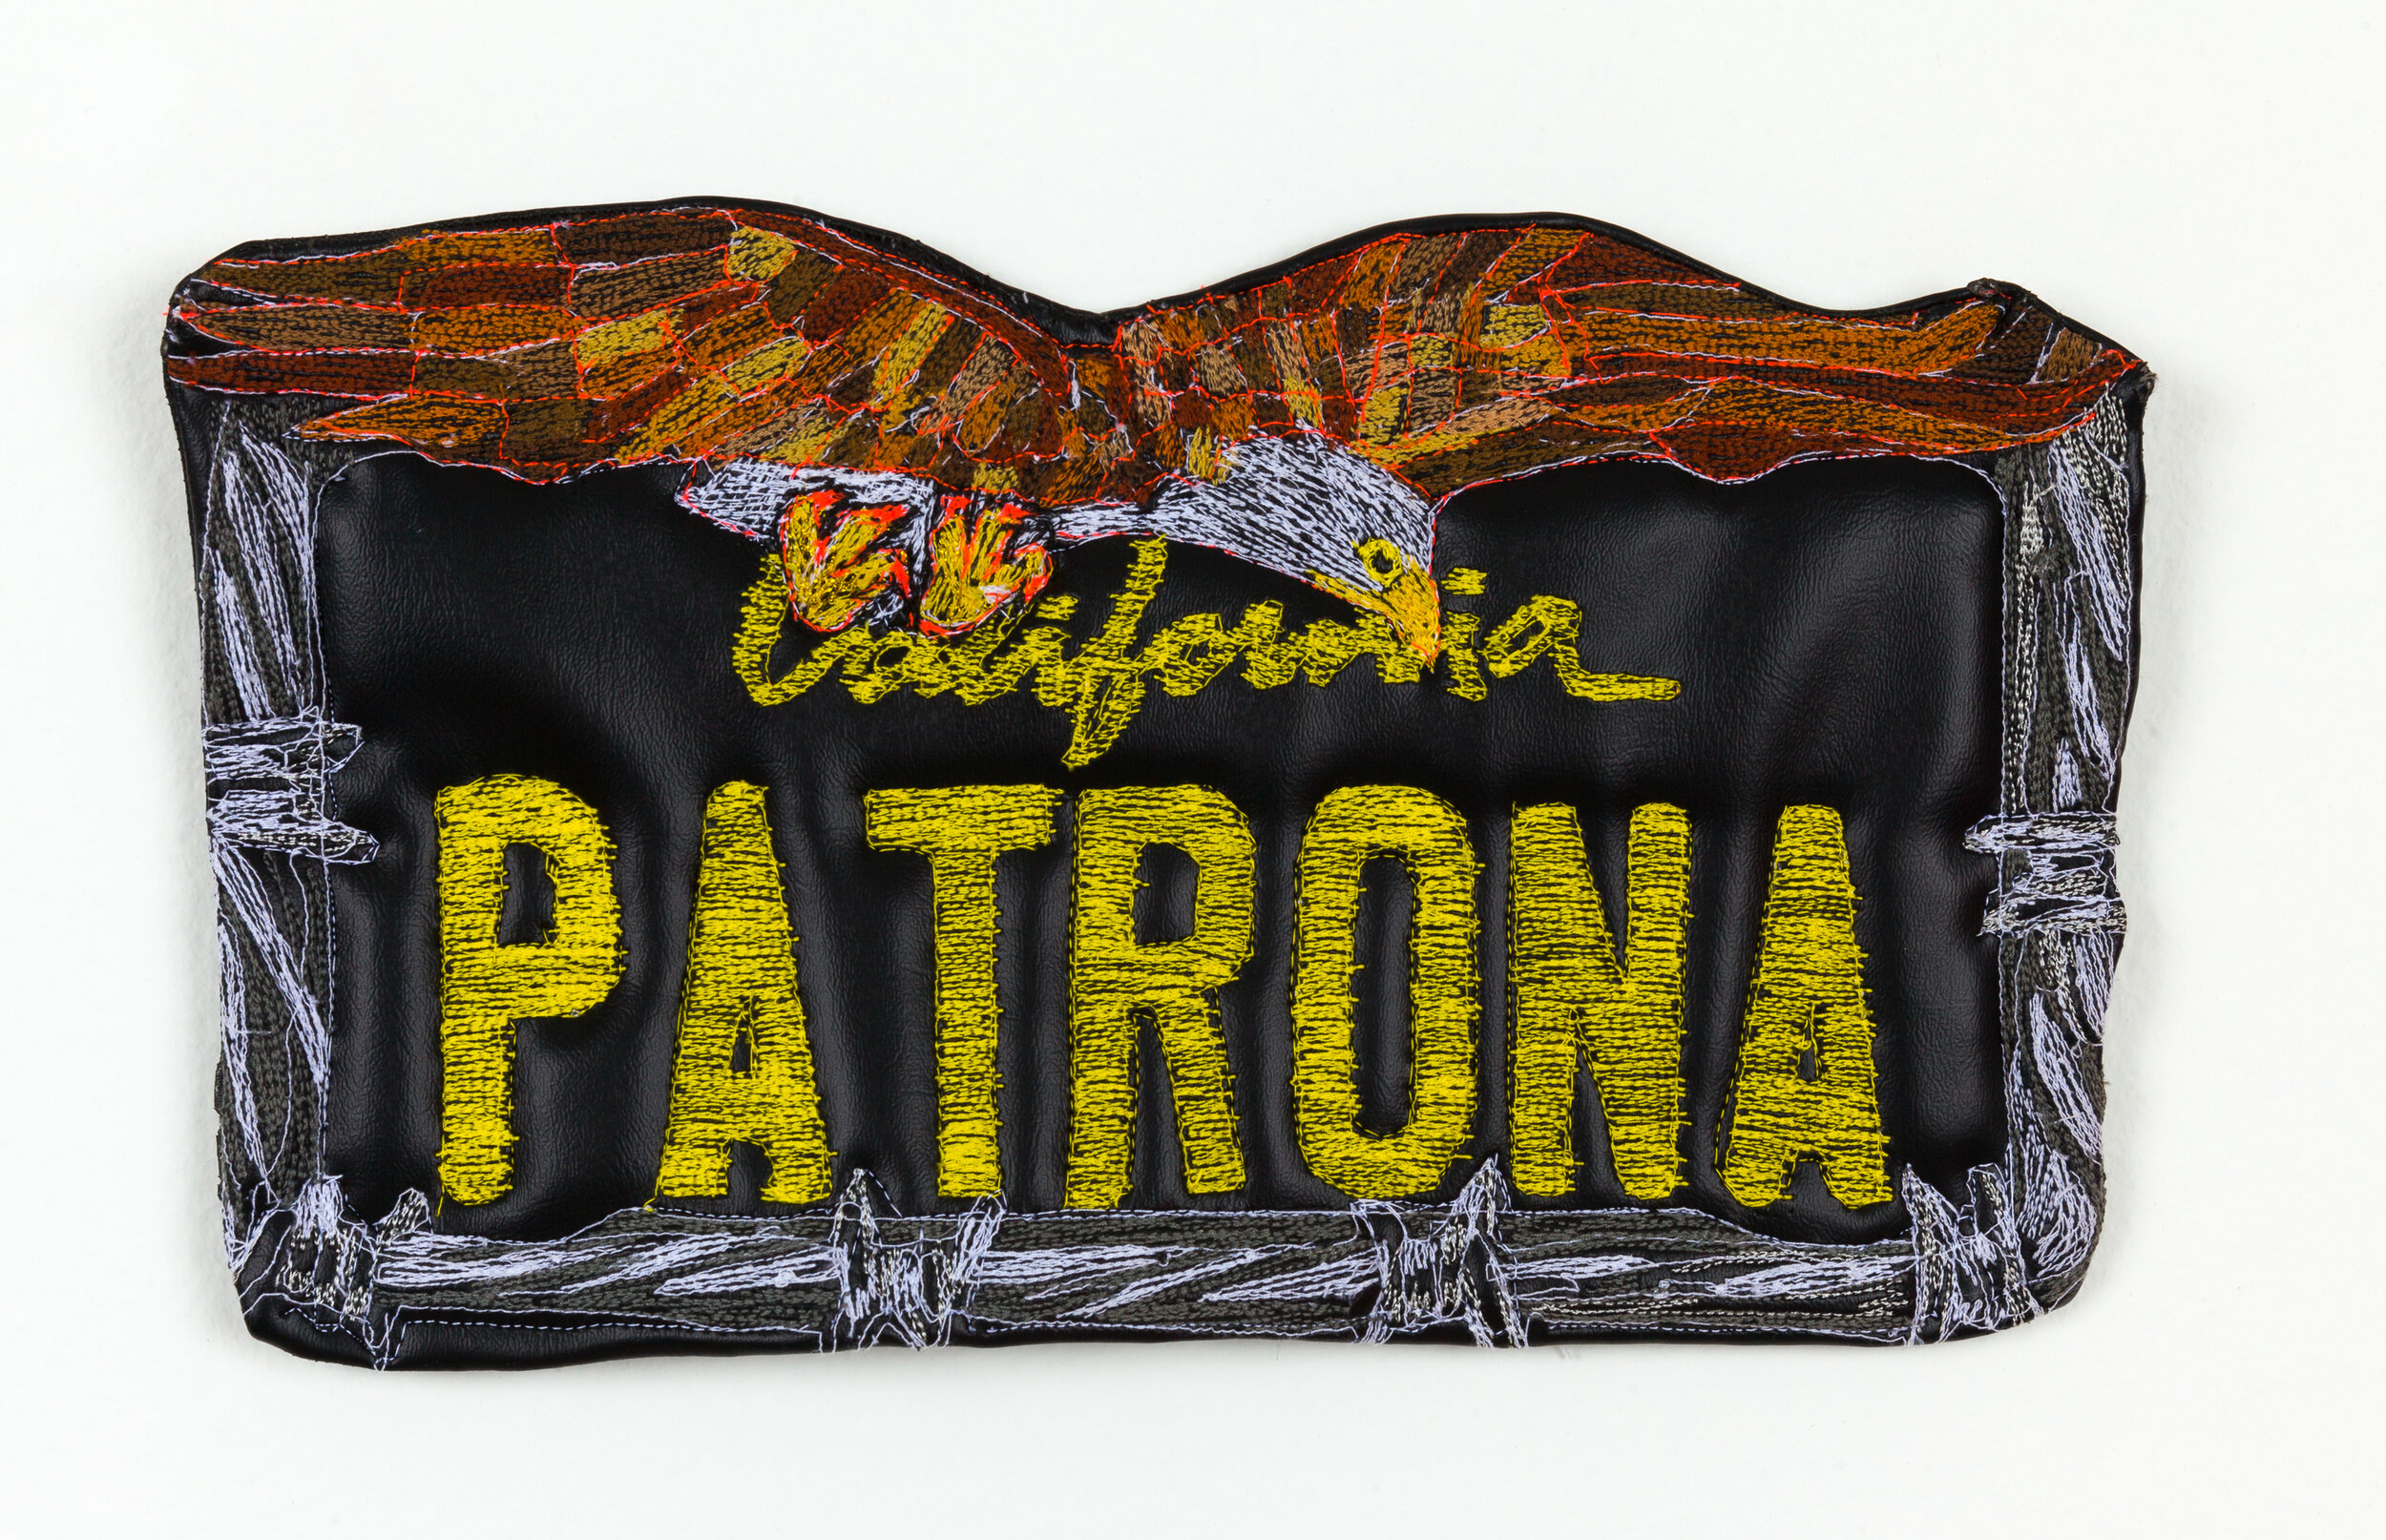  PATRONA, 2020  faux leather, thread, polyurethane foam, hardware  7.5X13 inches   